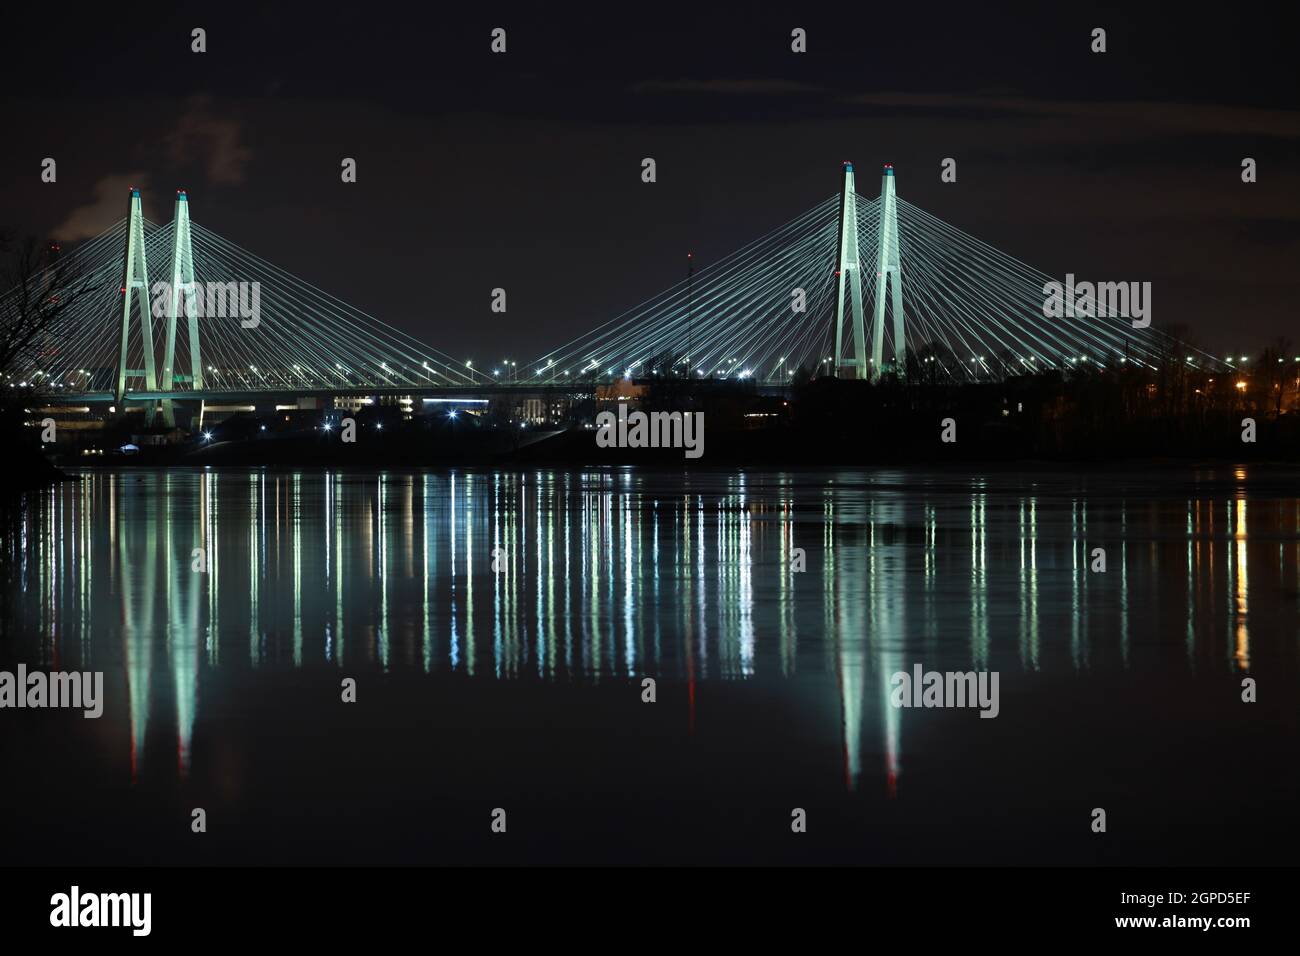 Big cable-stayed bridge of St. Petersburg illuminated at night Stock Photo